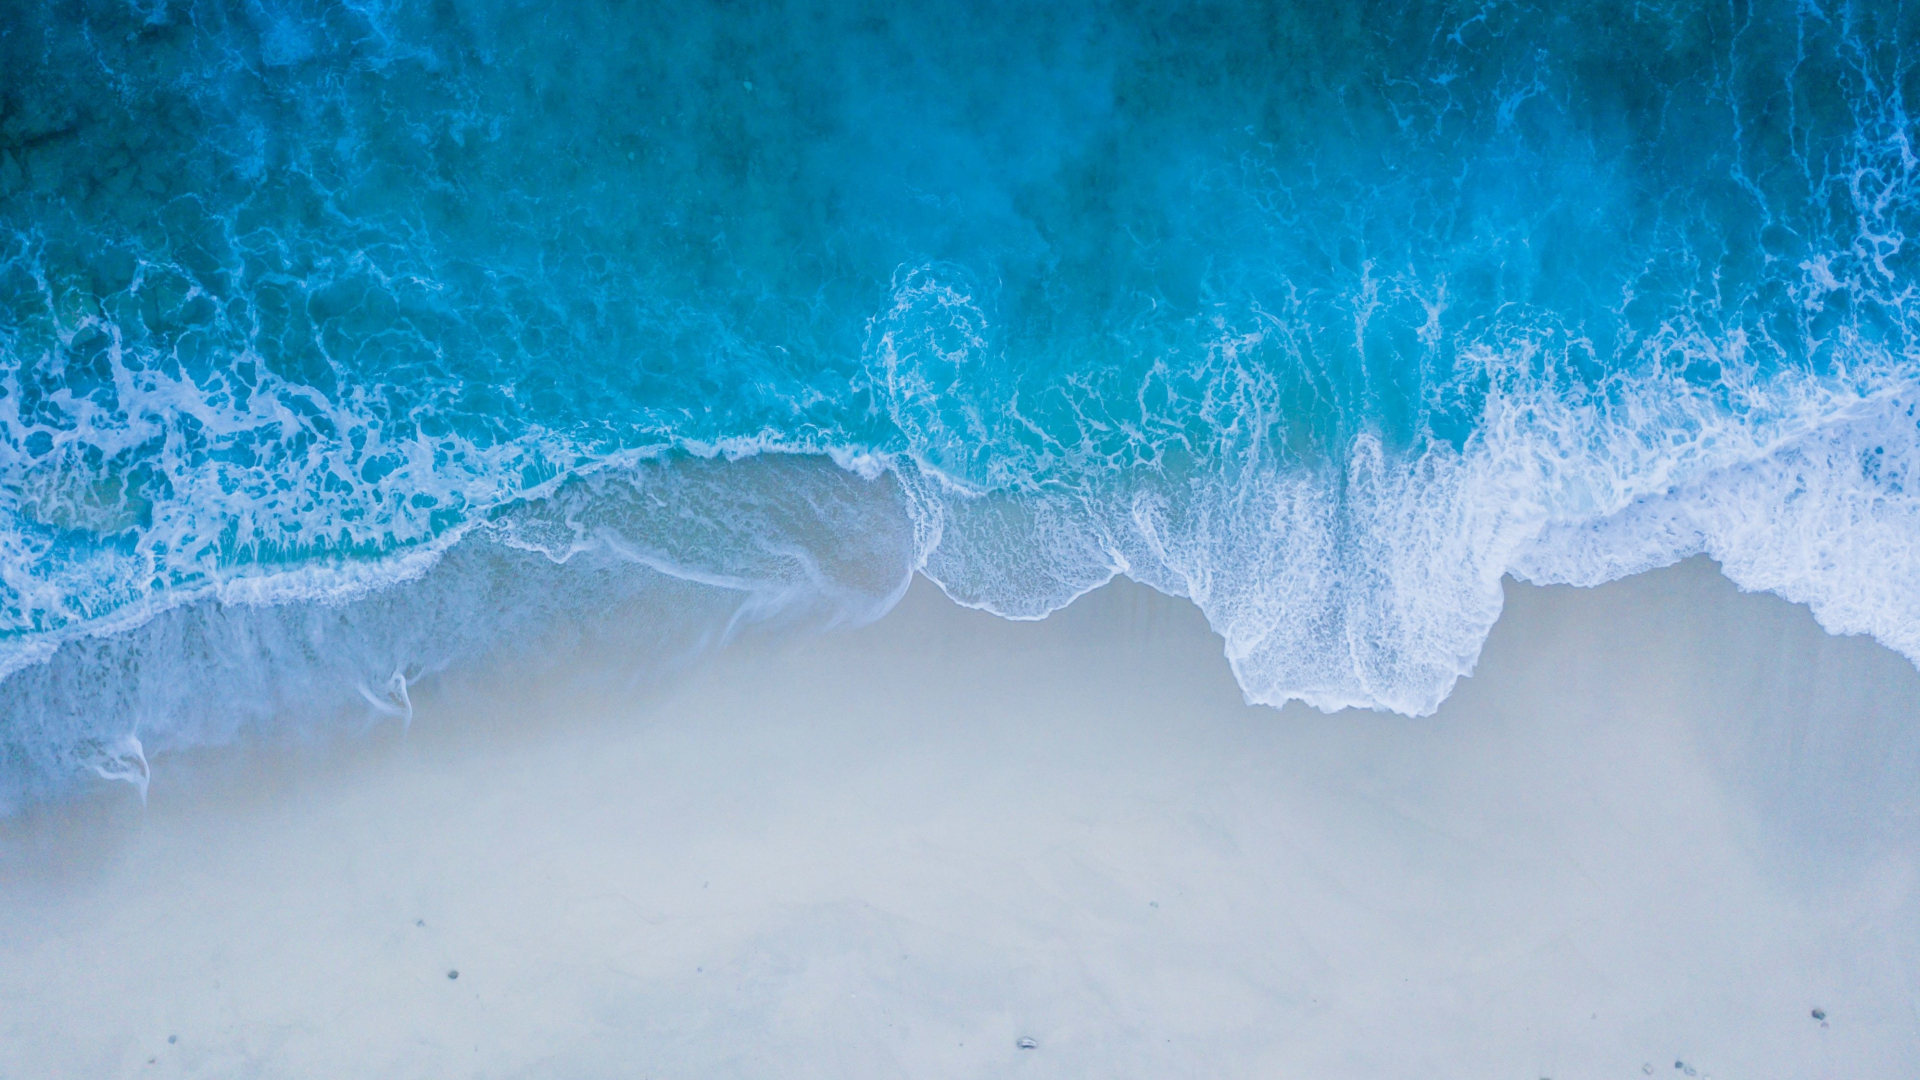 Download 1920x1080 Wallpaper Beach Sea Shore Blue Water Sea Waves